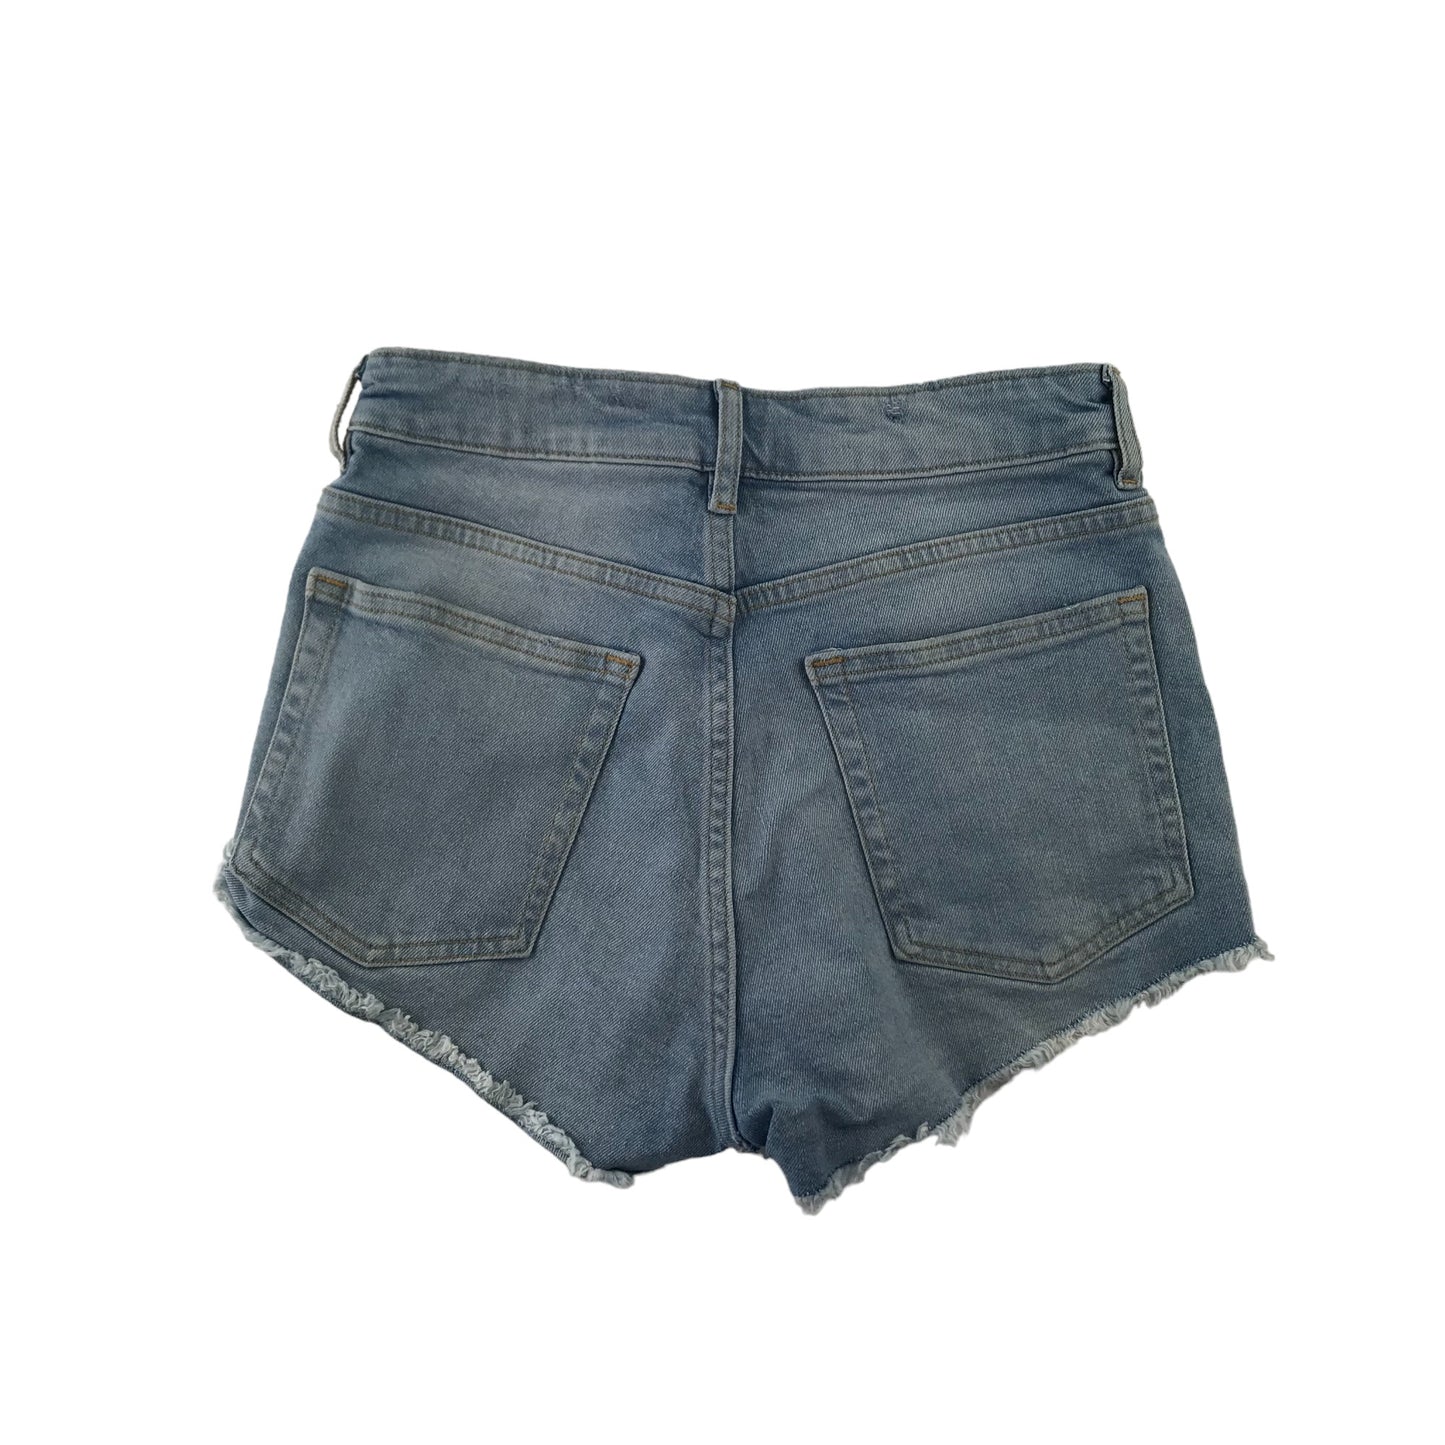 H&M shorts Size 8 Women's denim blue ripped hem